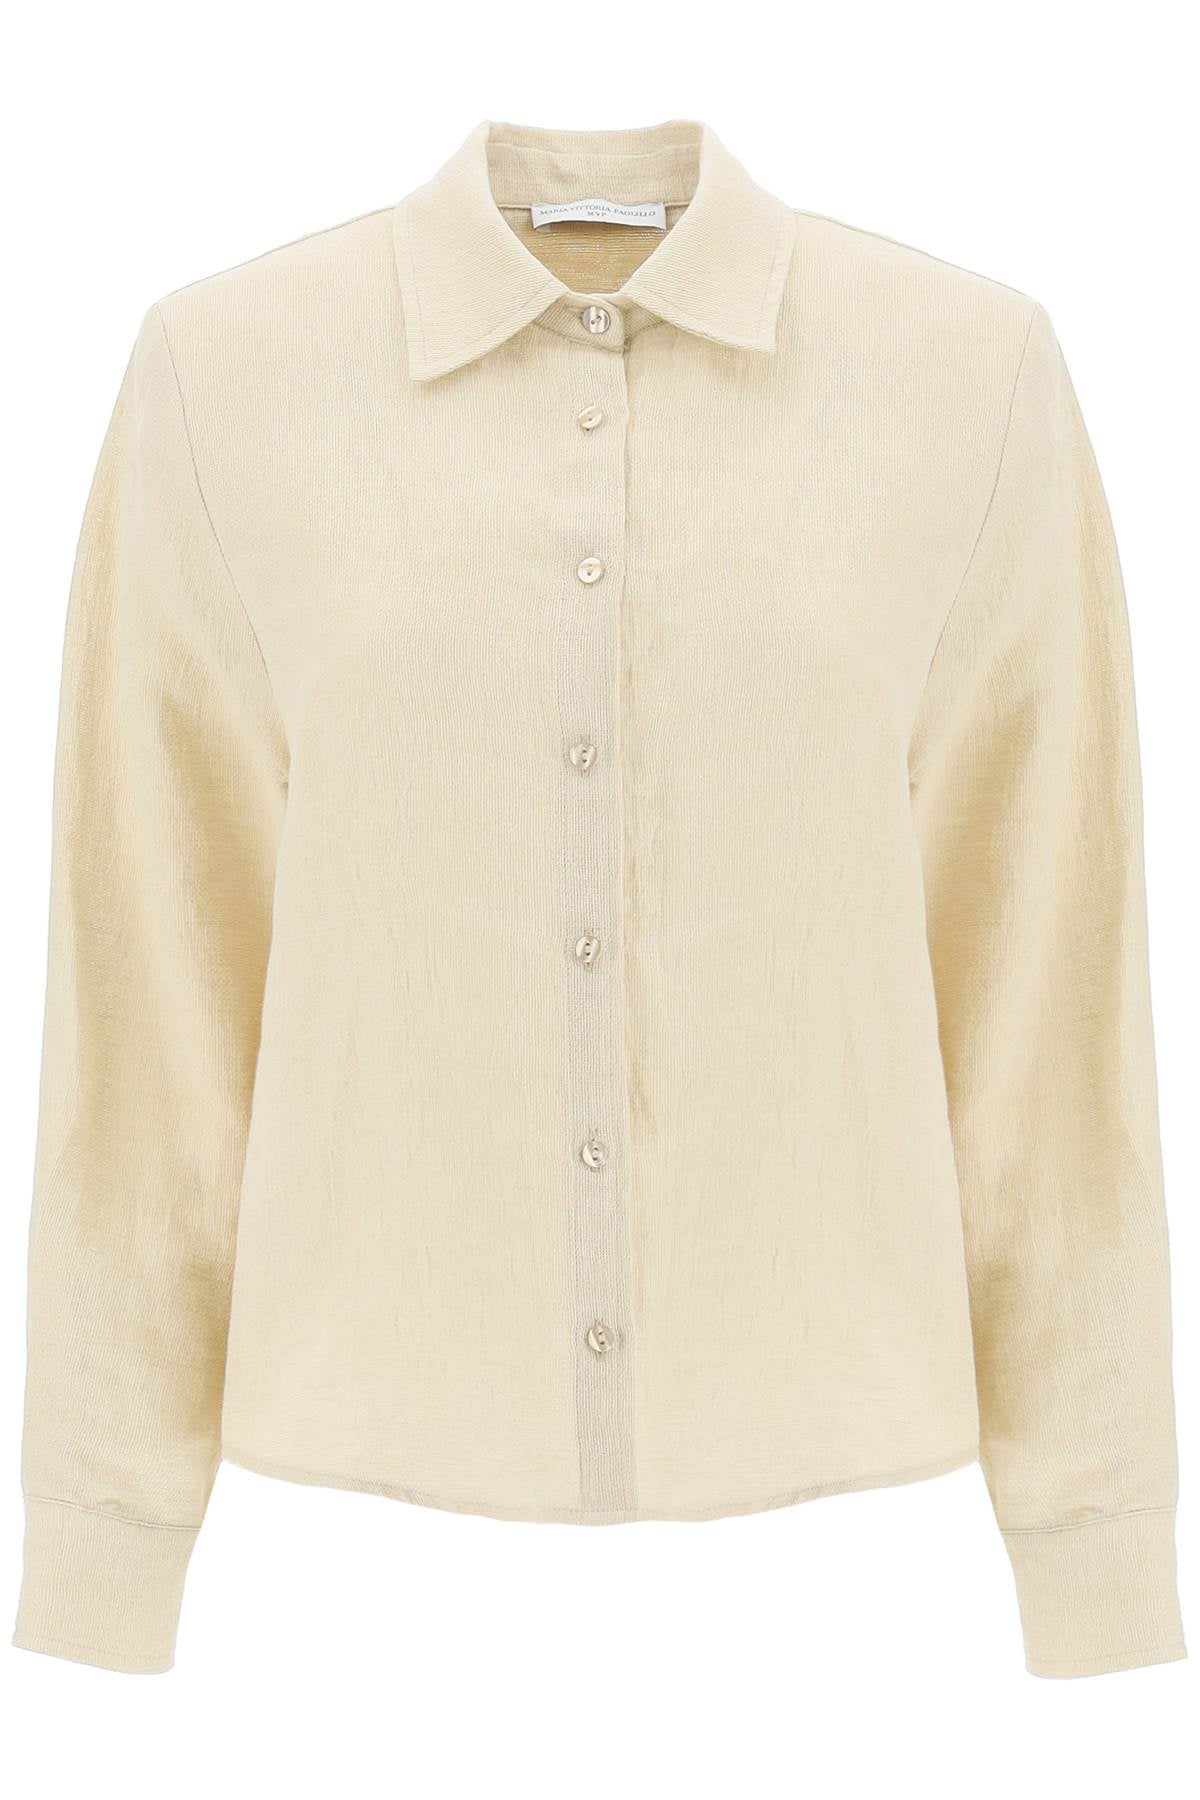 Mvp wardrobe 'malibu' cotton linen shirt-0